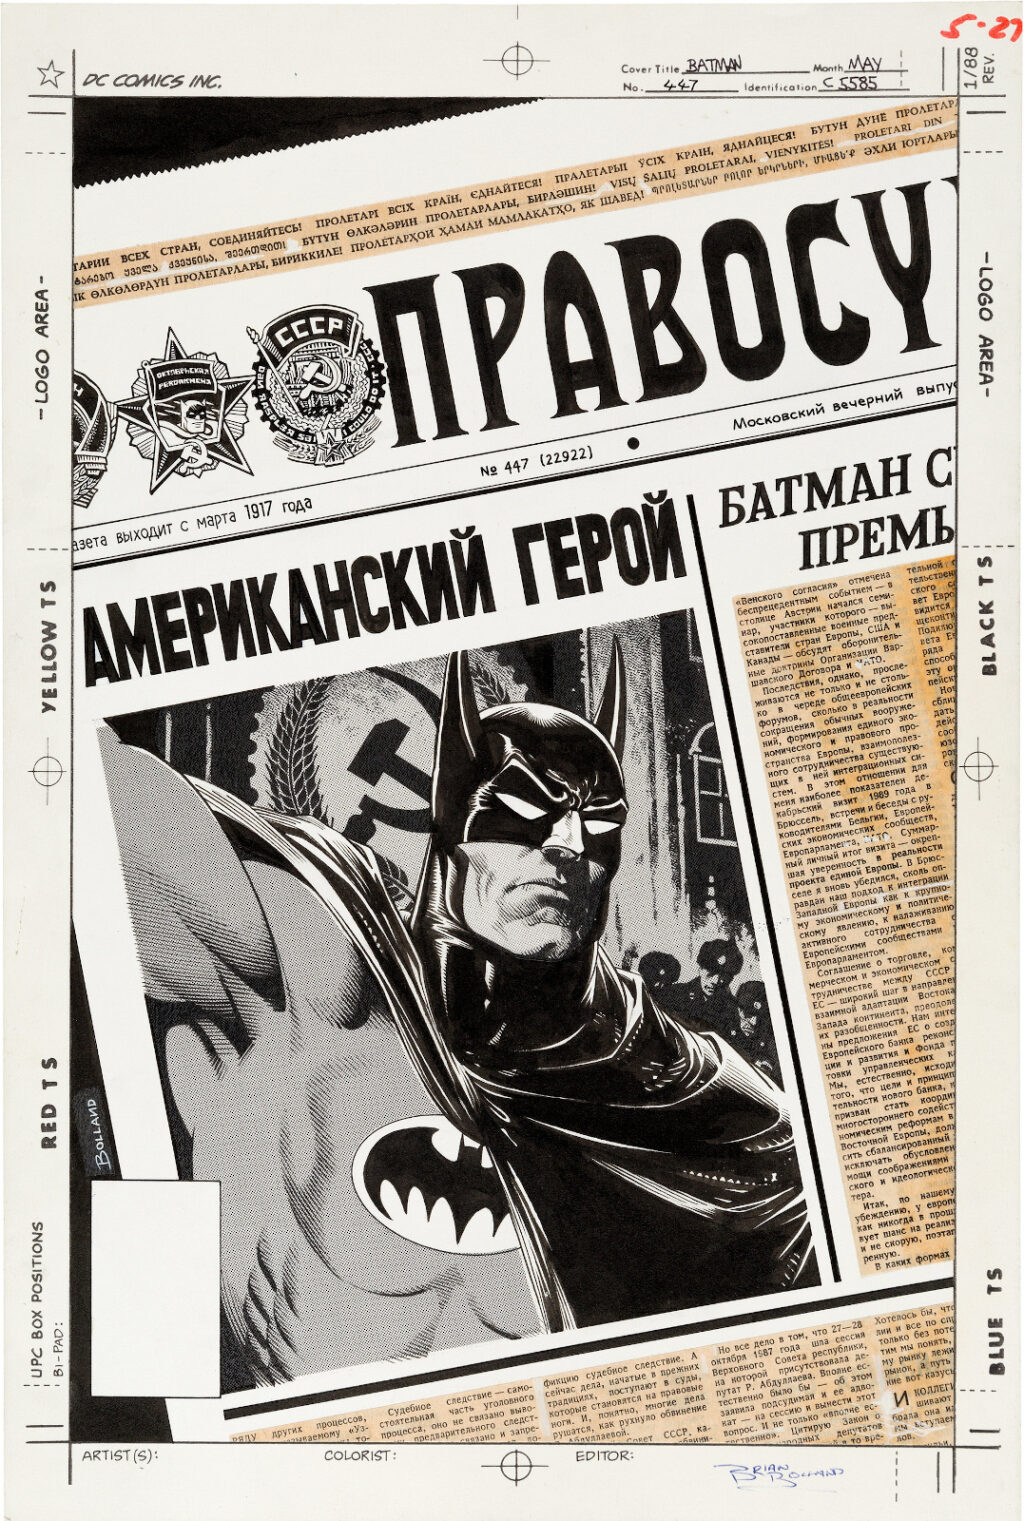 Batman issue 447 cover by Brian Bolland